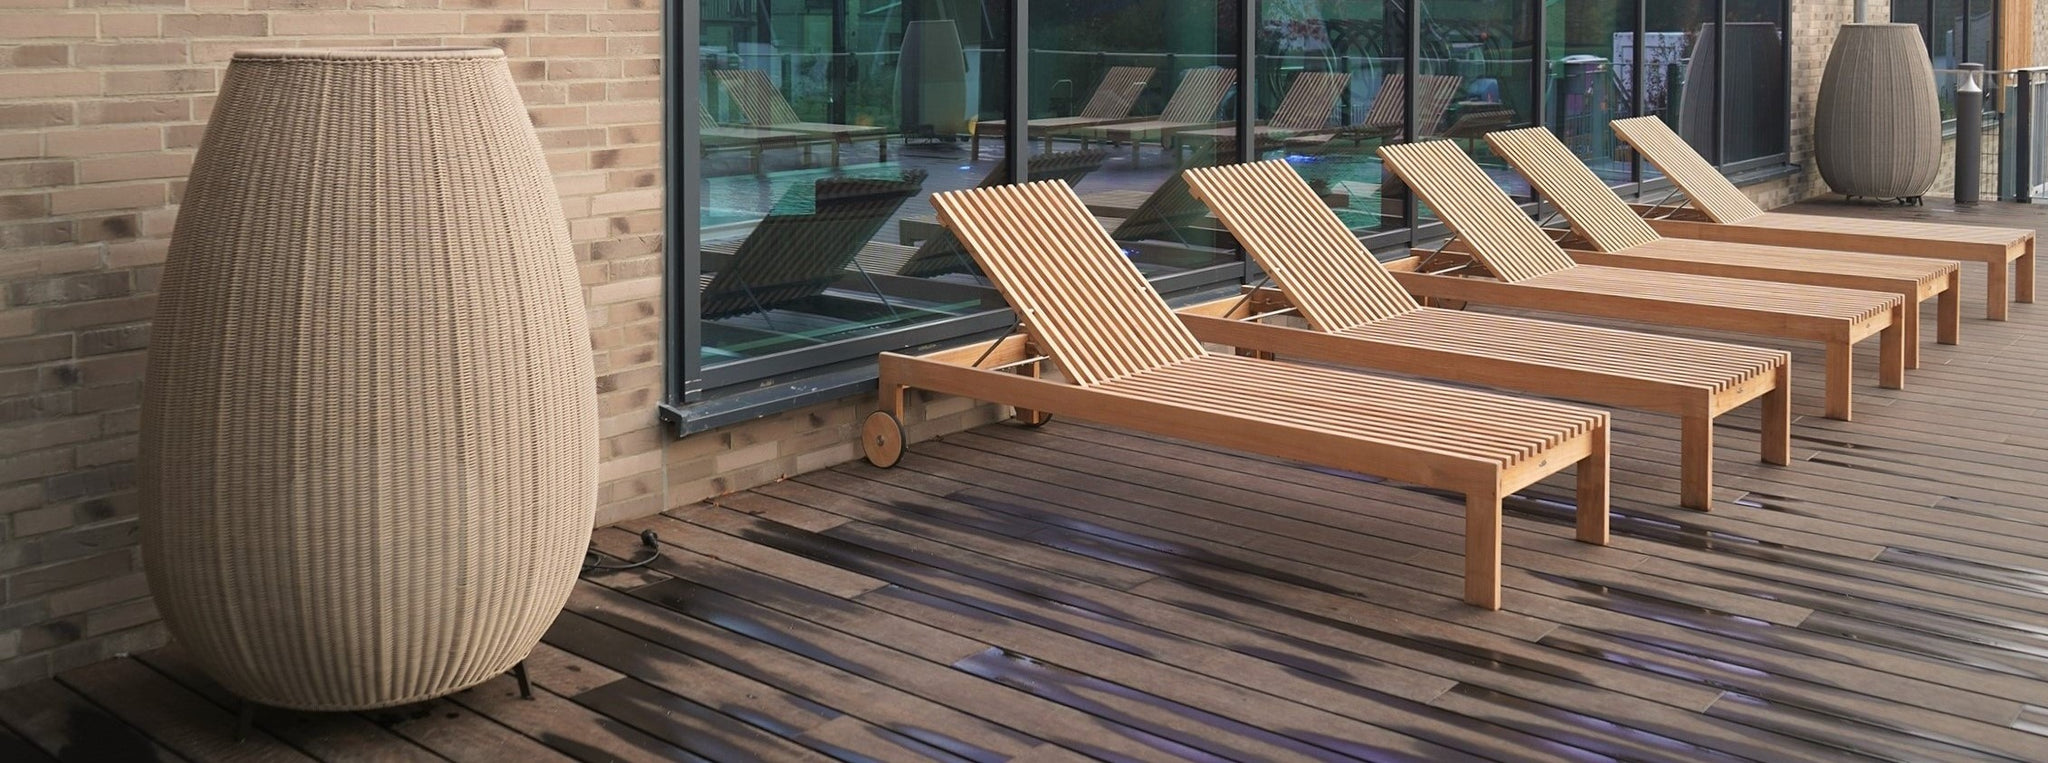 Five Cane-line Amaze sunbeds in teak wood on the terrace